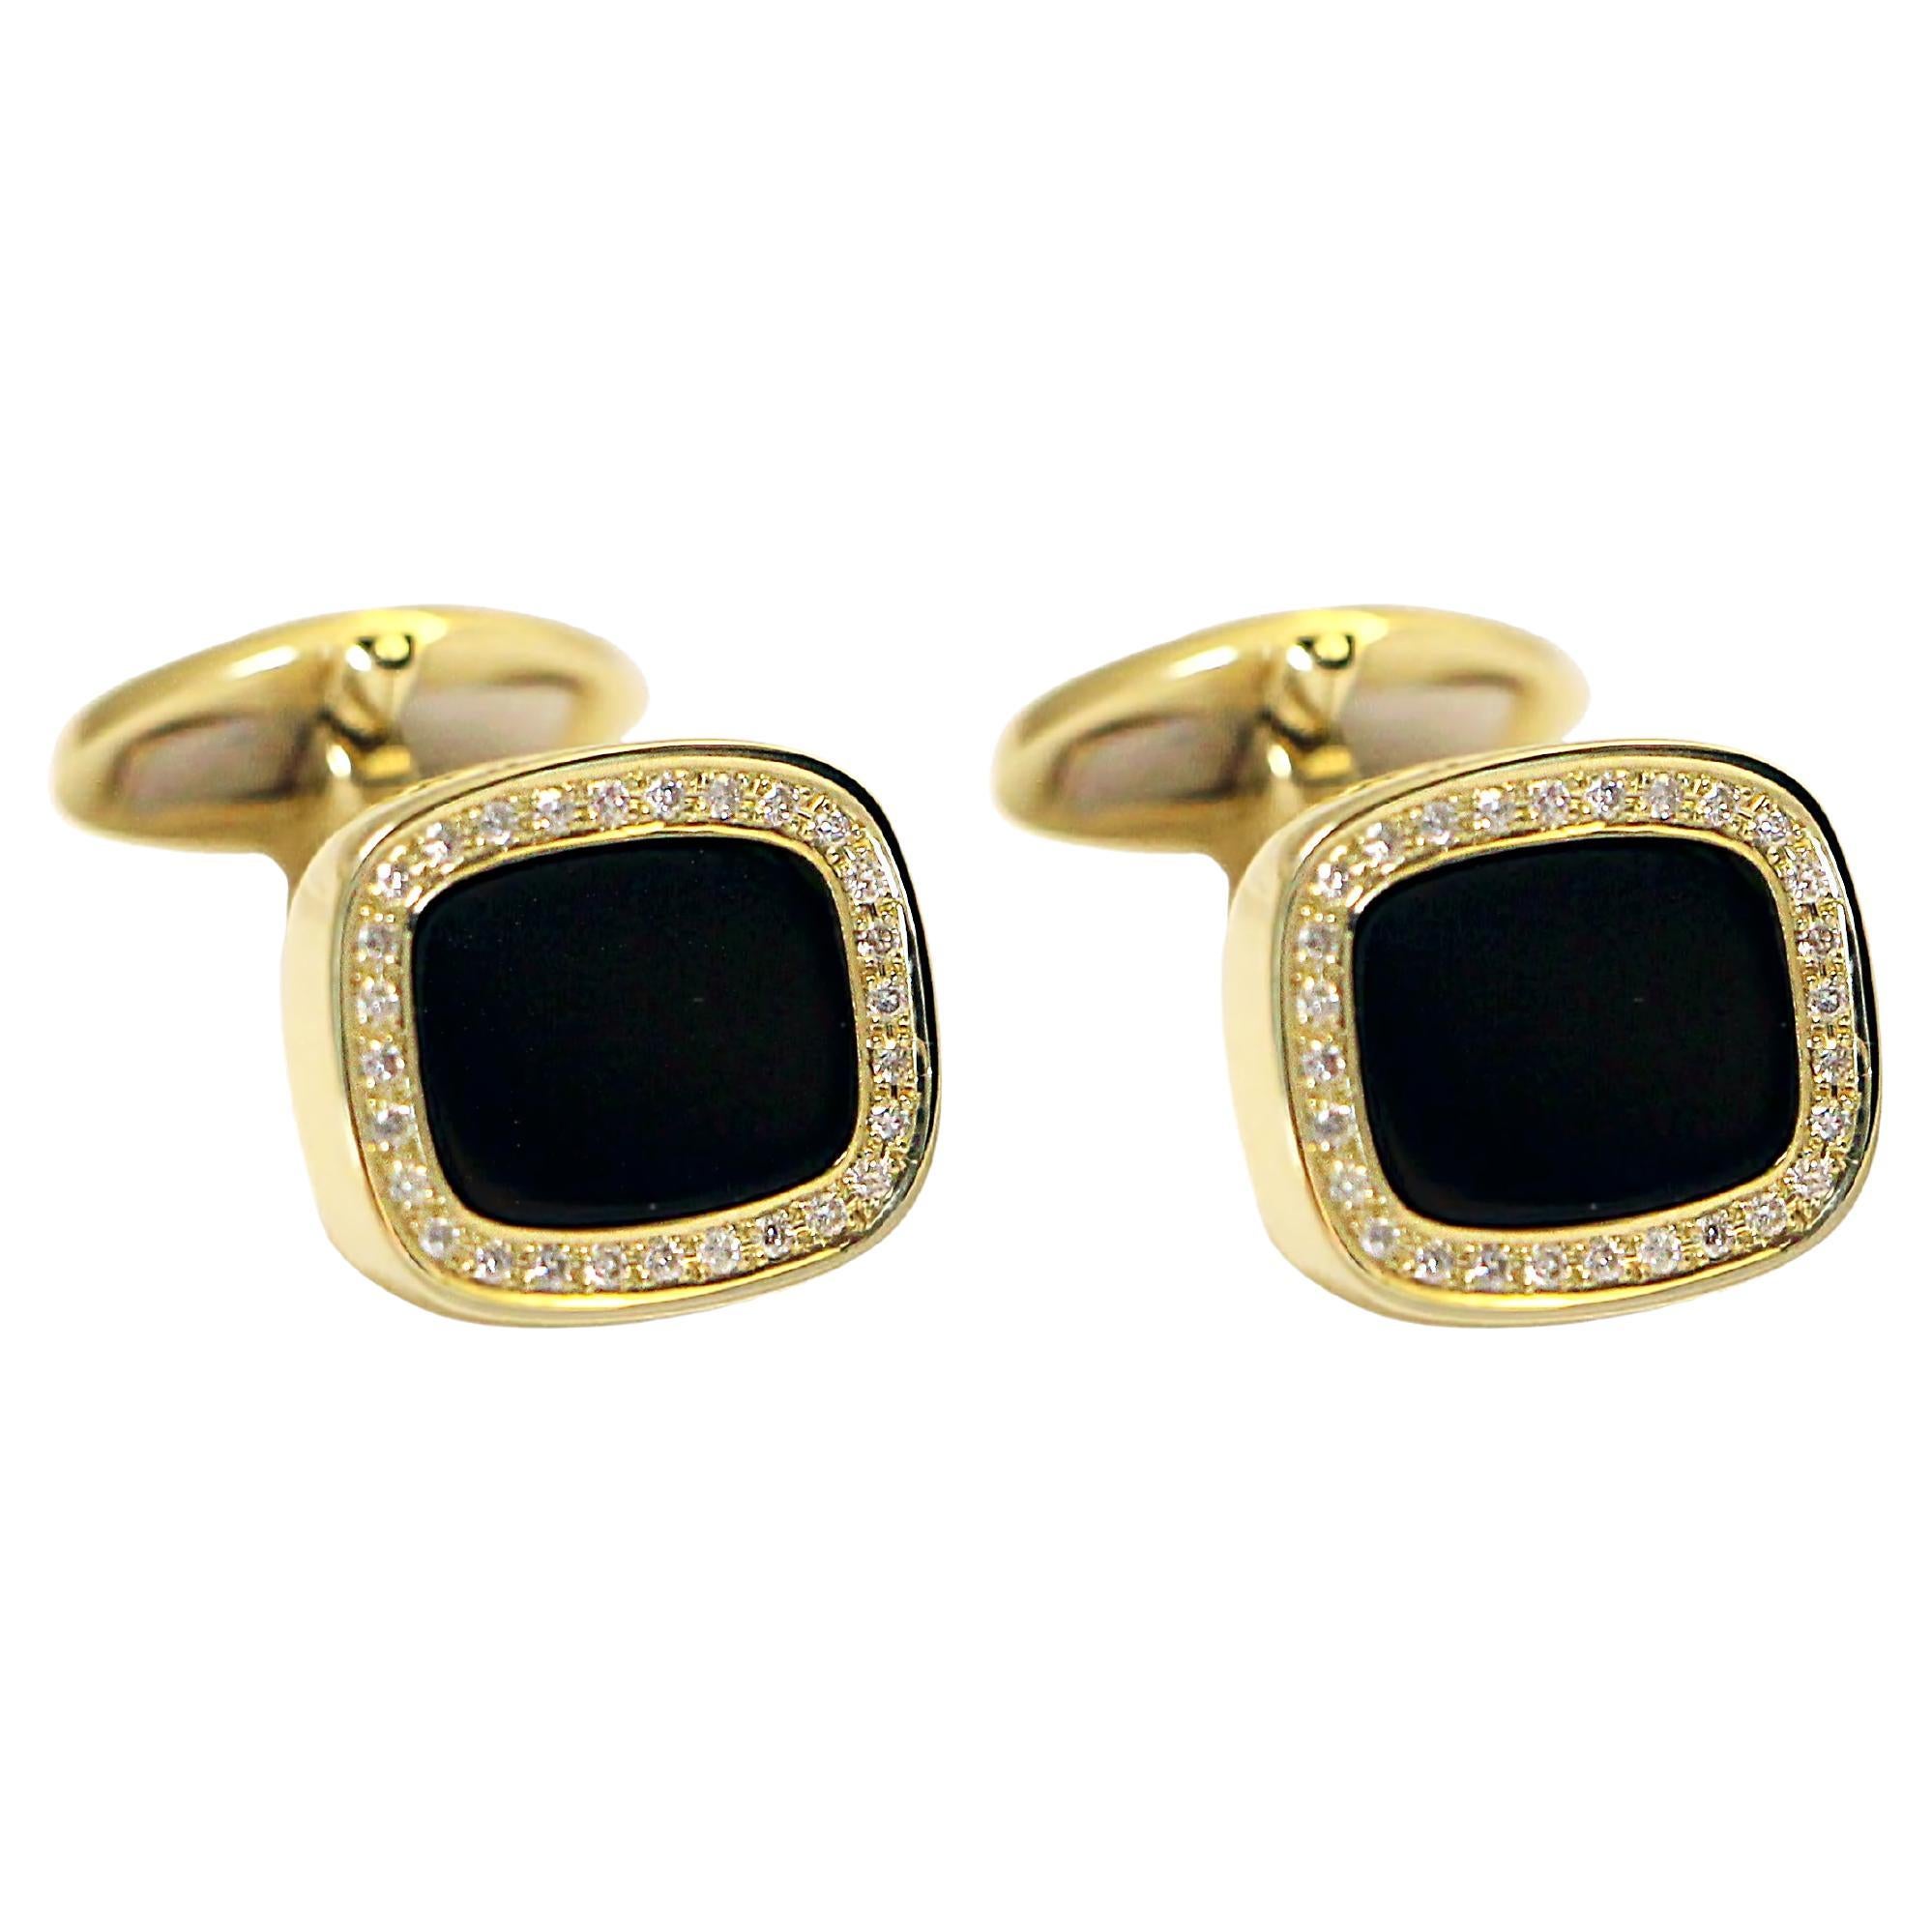 Black Onyx Cufflinks with Brilliant Cut Diamonds in 14Kt Yellow Gold